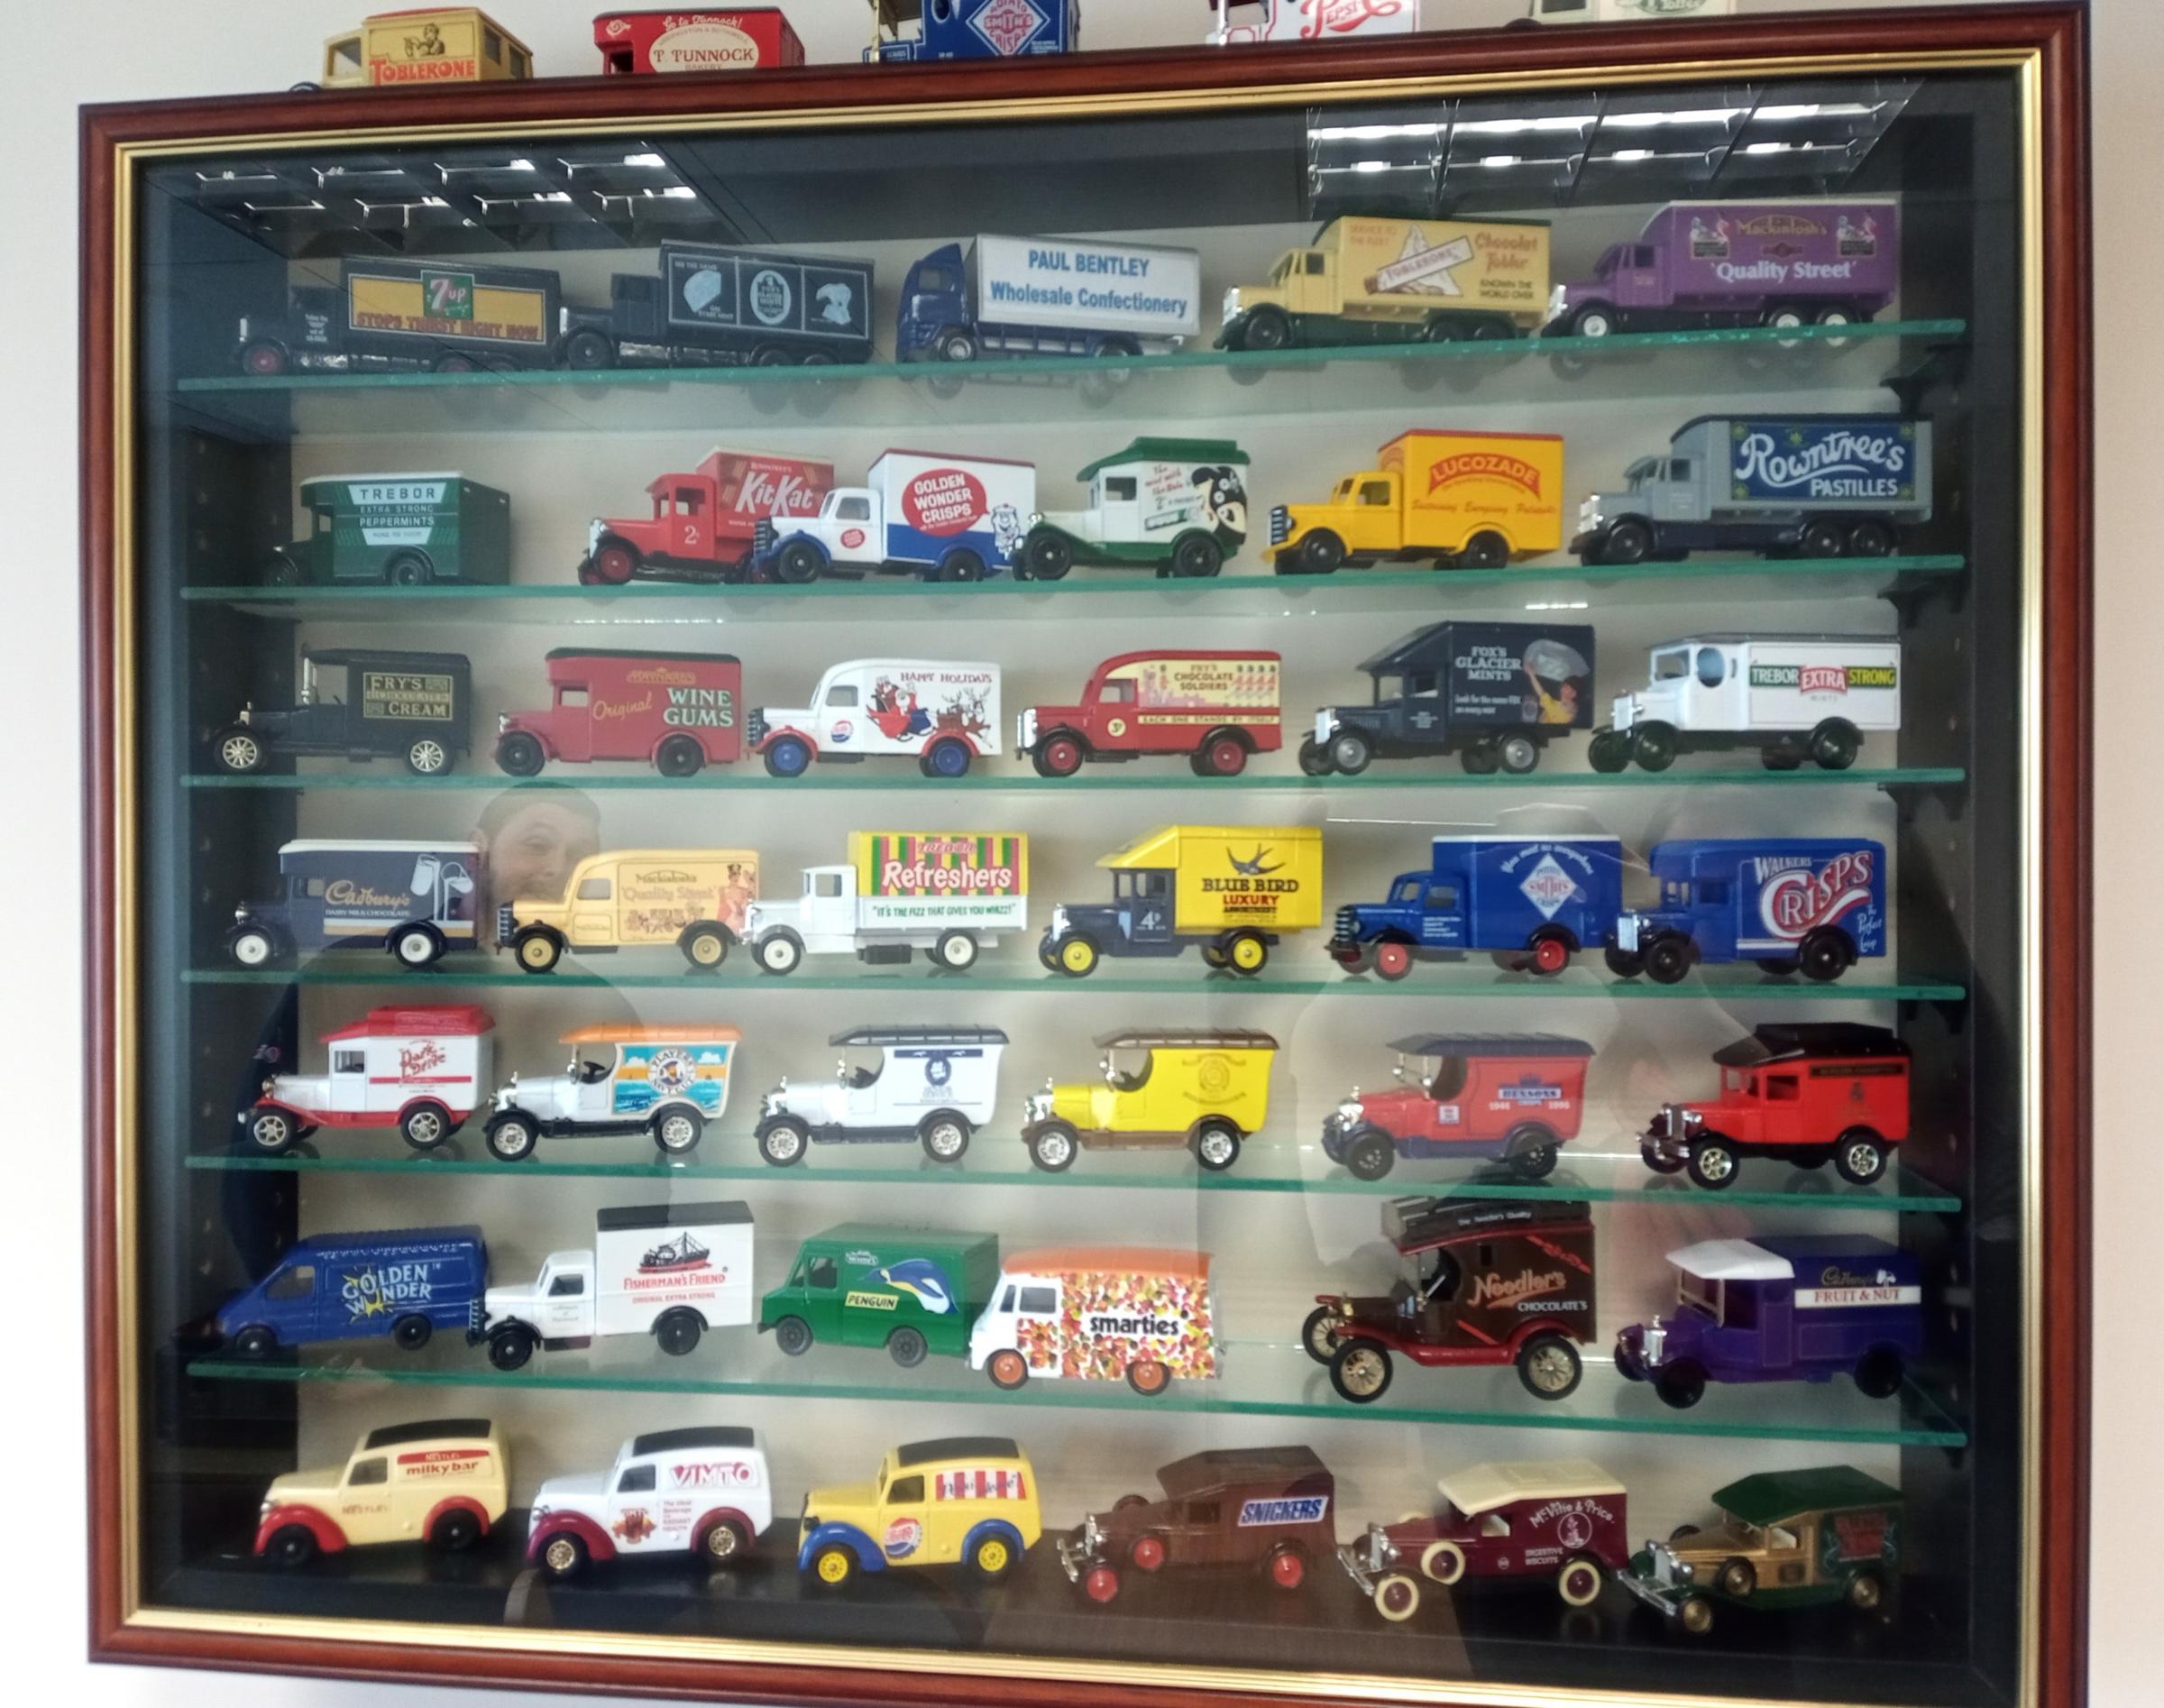 Part of Paul Bentleys collection of miniature confectionery vans.